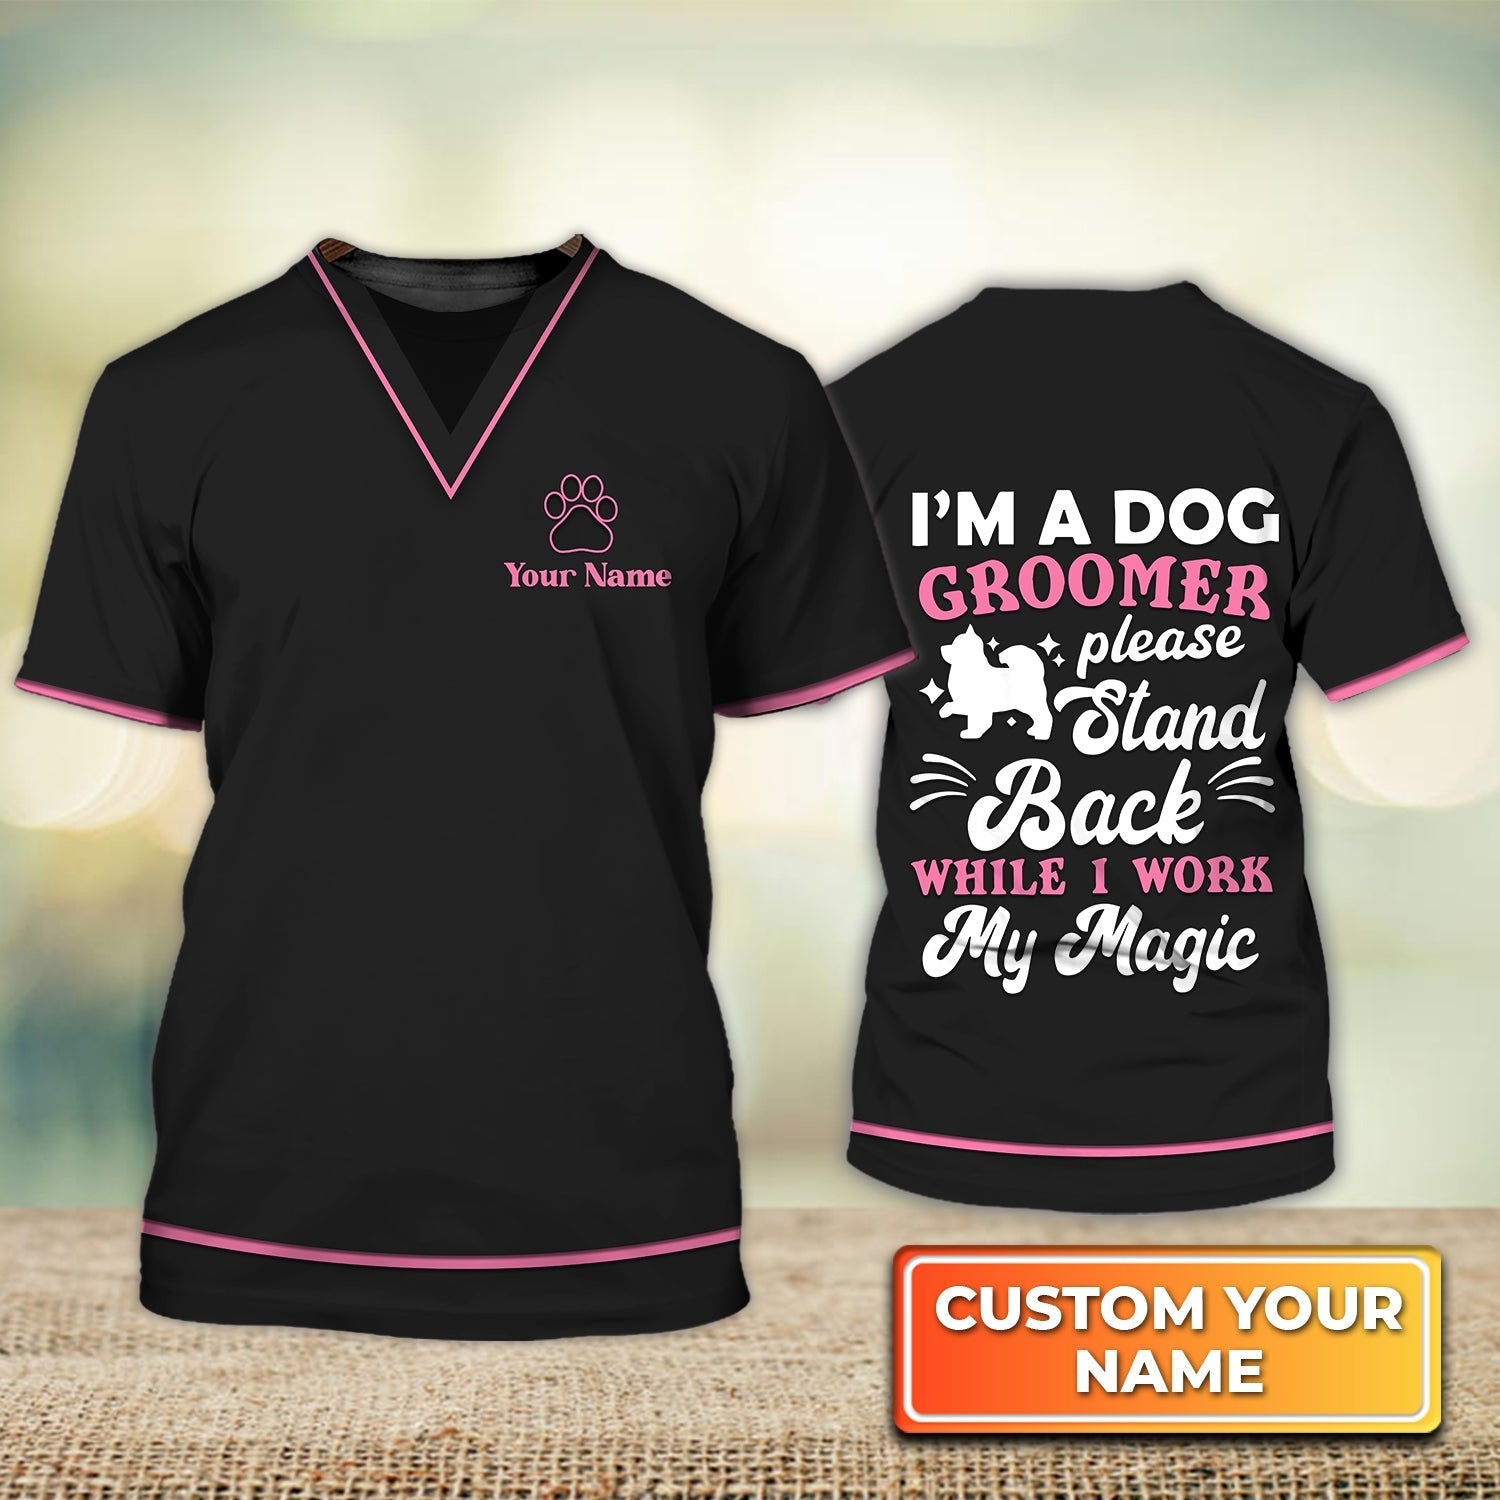 Custom Groomer Shirt Men Women I''m Dog Groomer Pet Groomer Uniform Black And Pink Salon Pet